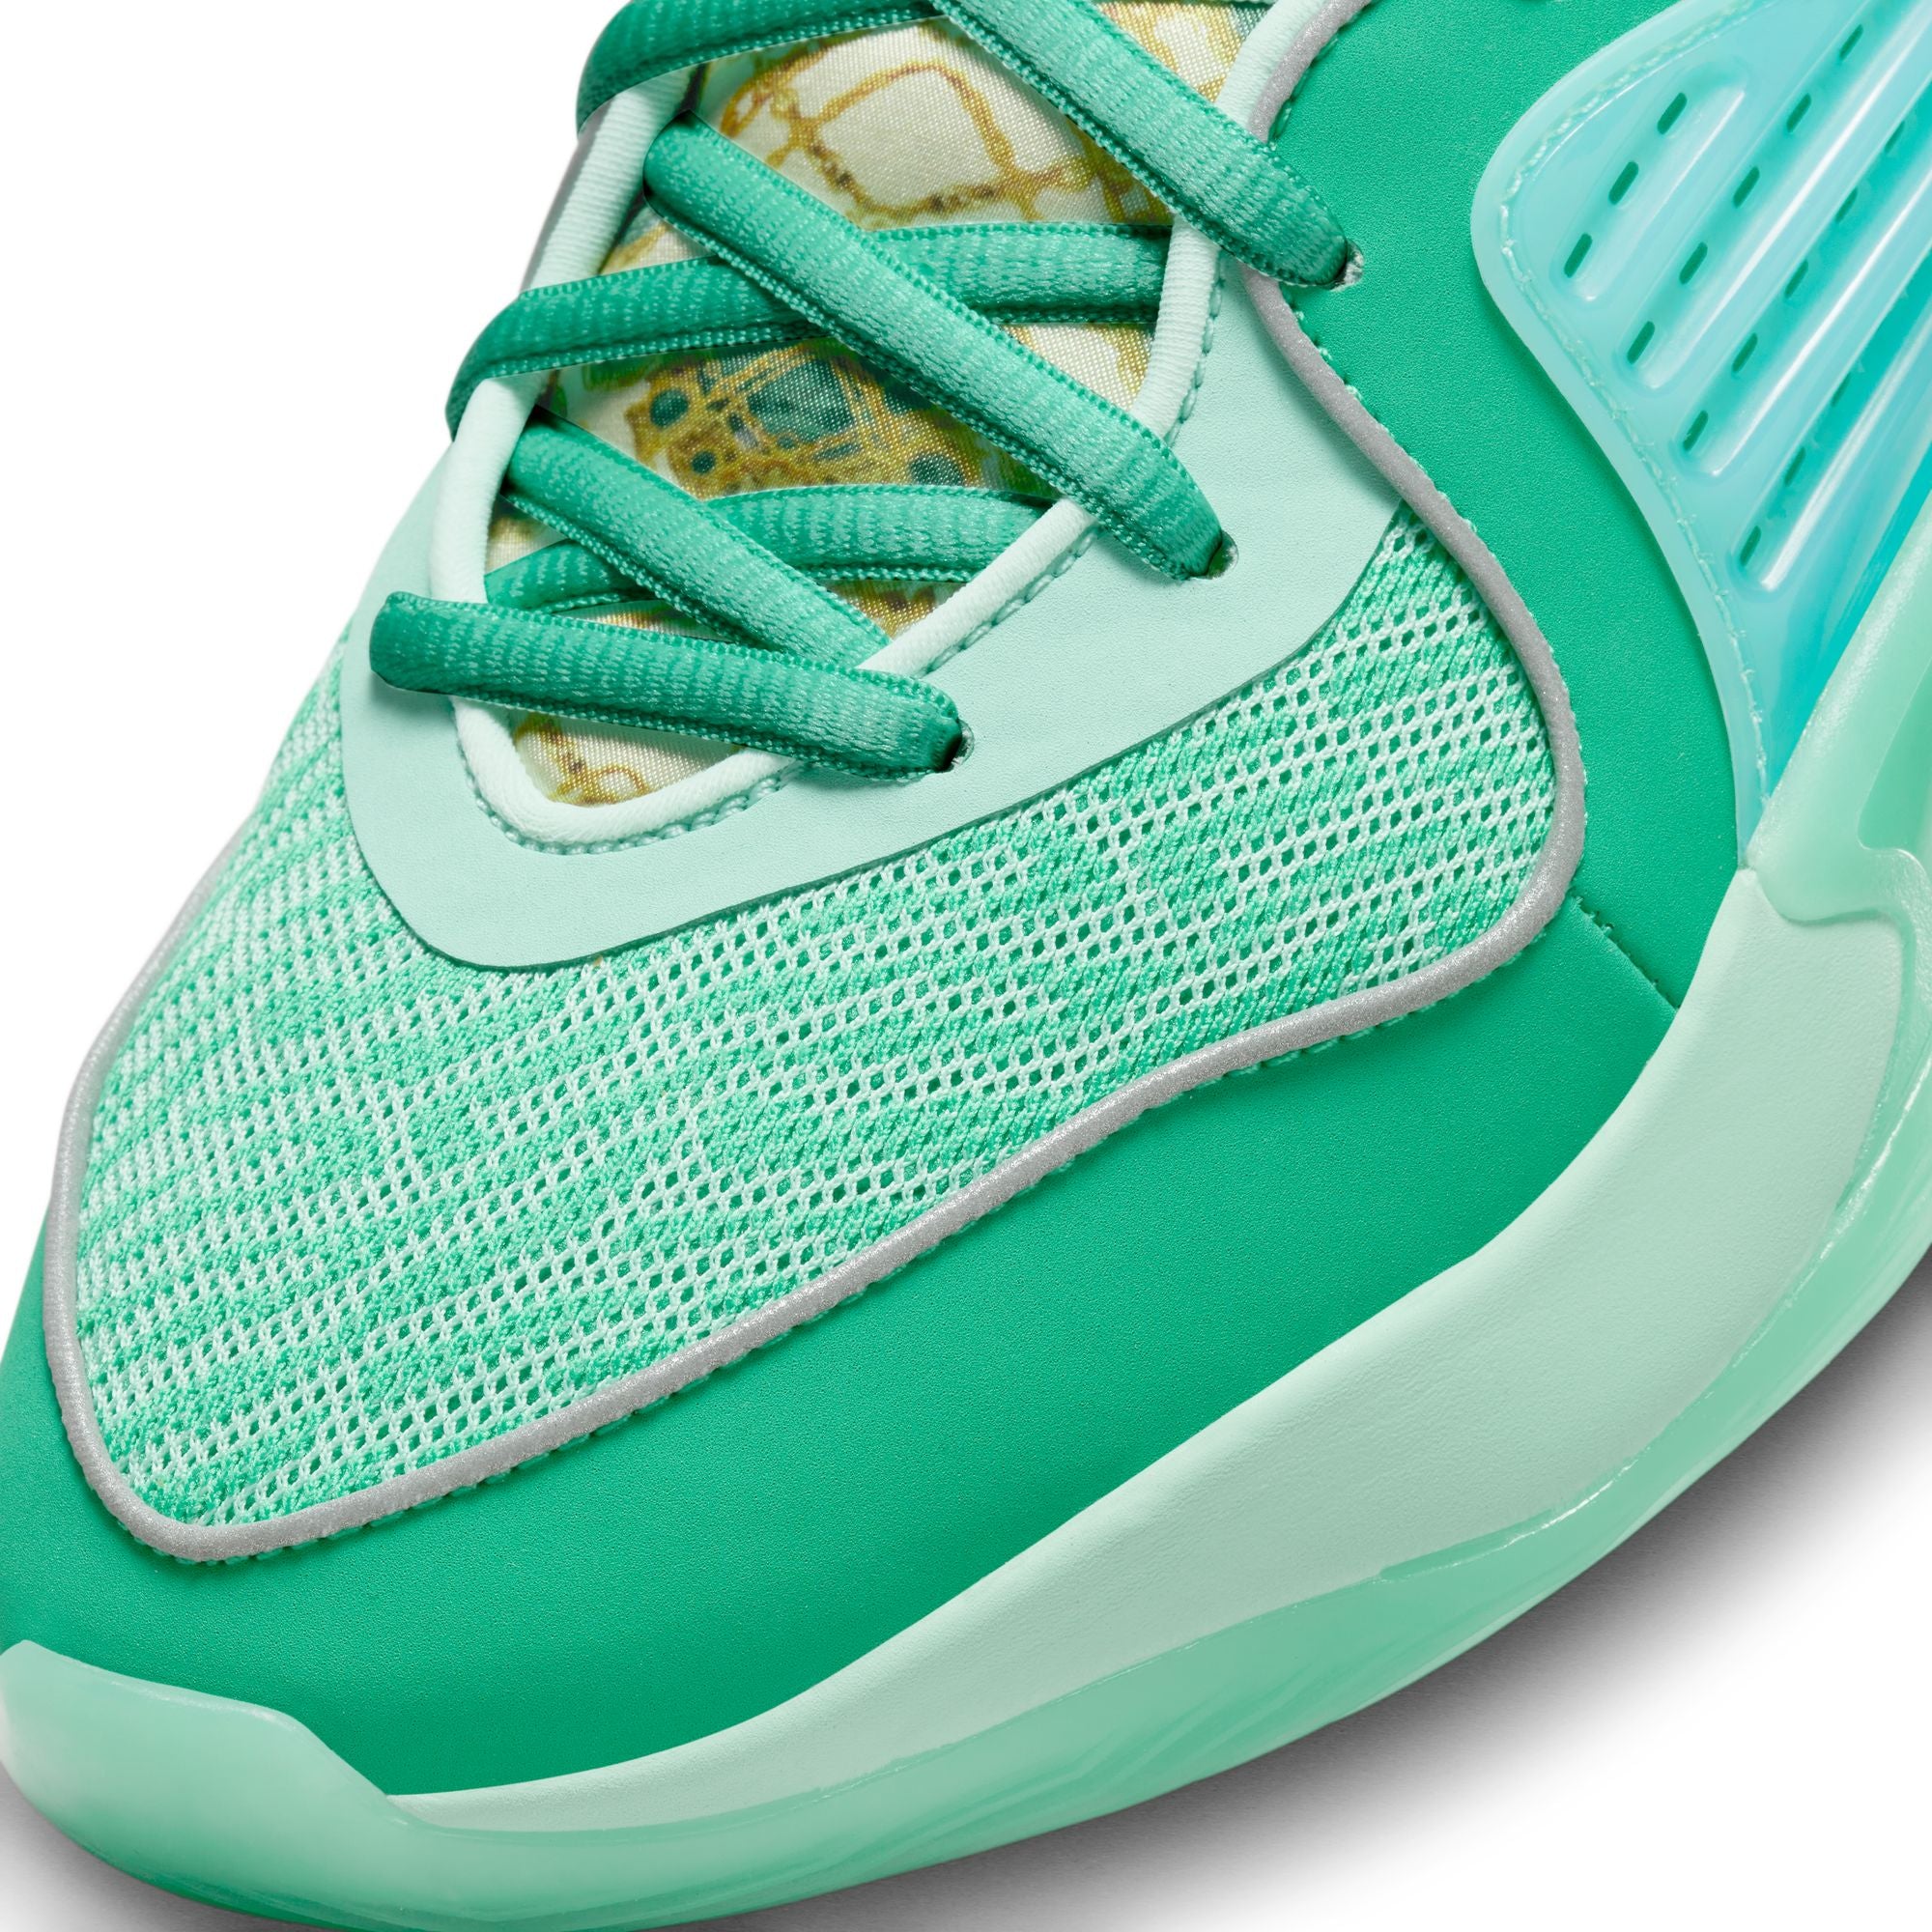 KD16 Basketball Shoes